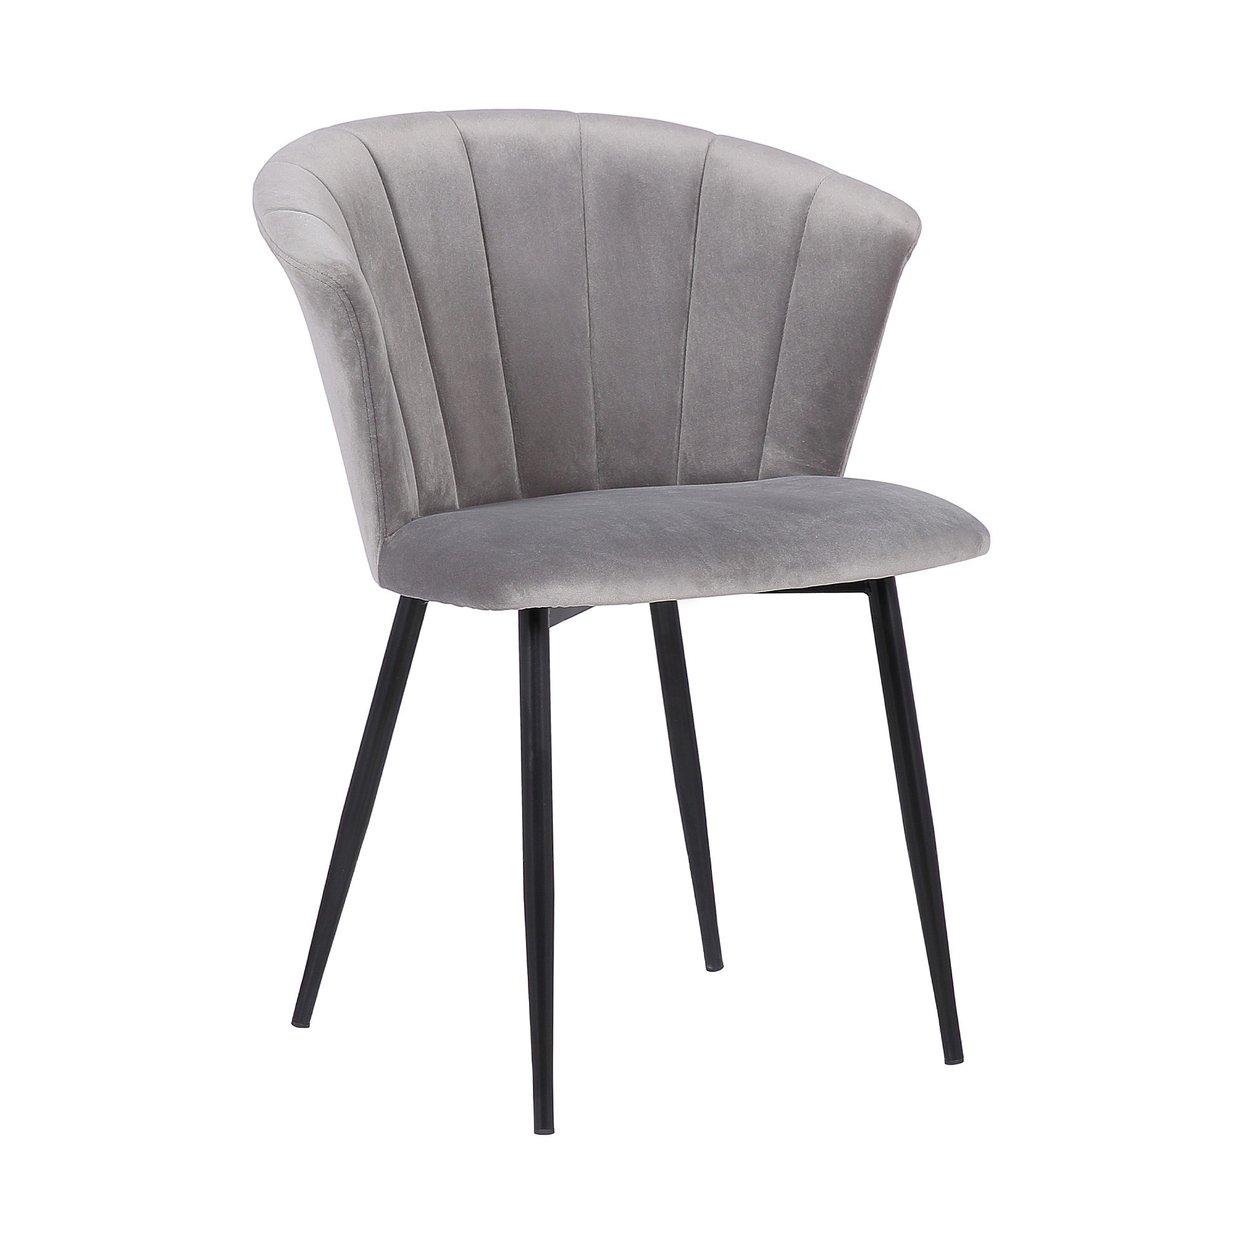 20 Inch Contemporary Velvet Dining Chair With Metal Legs, Gray- Saltoro Sherpi